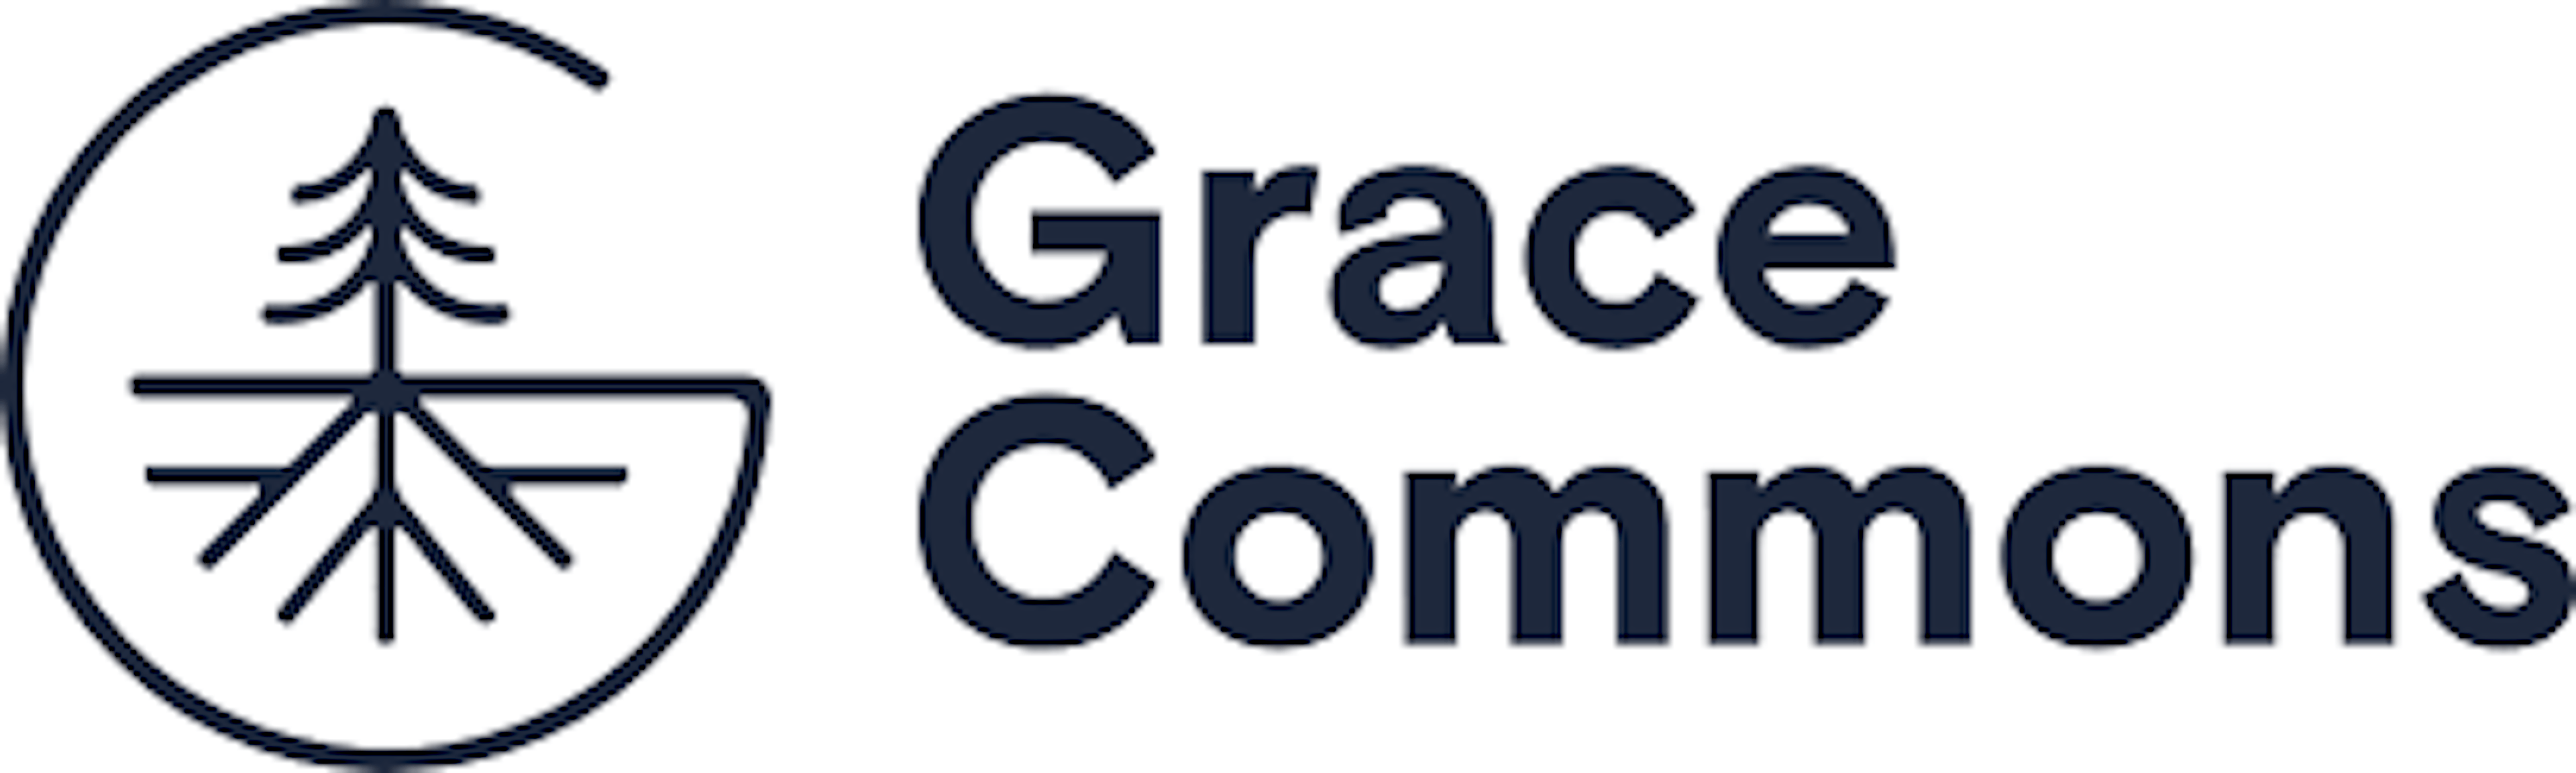 Grace Commons Logo